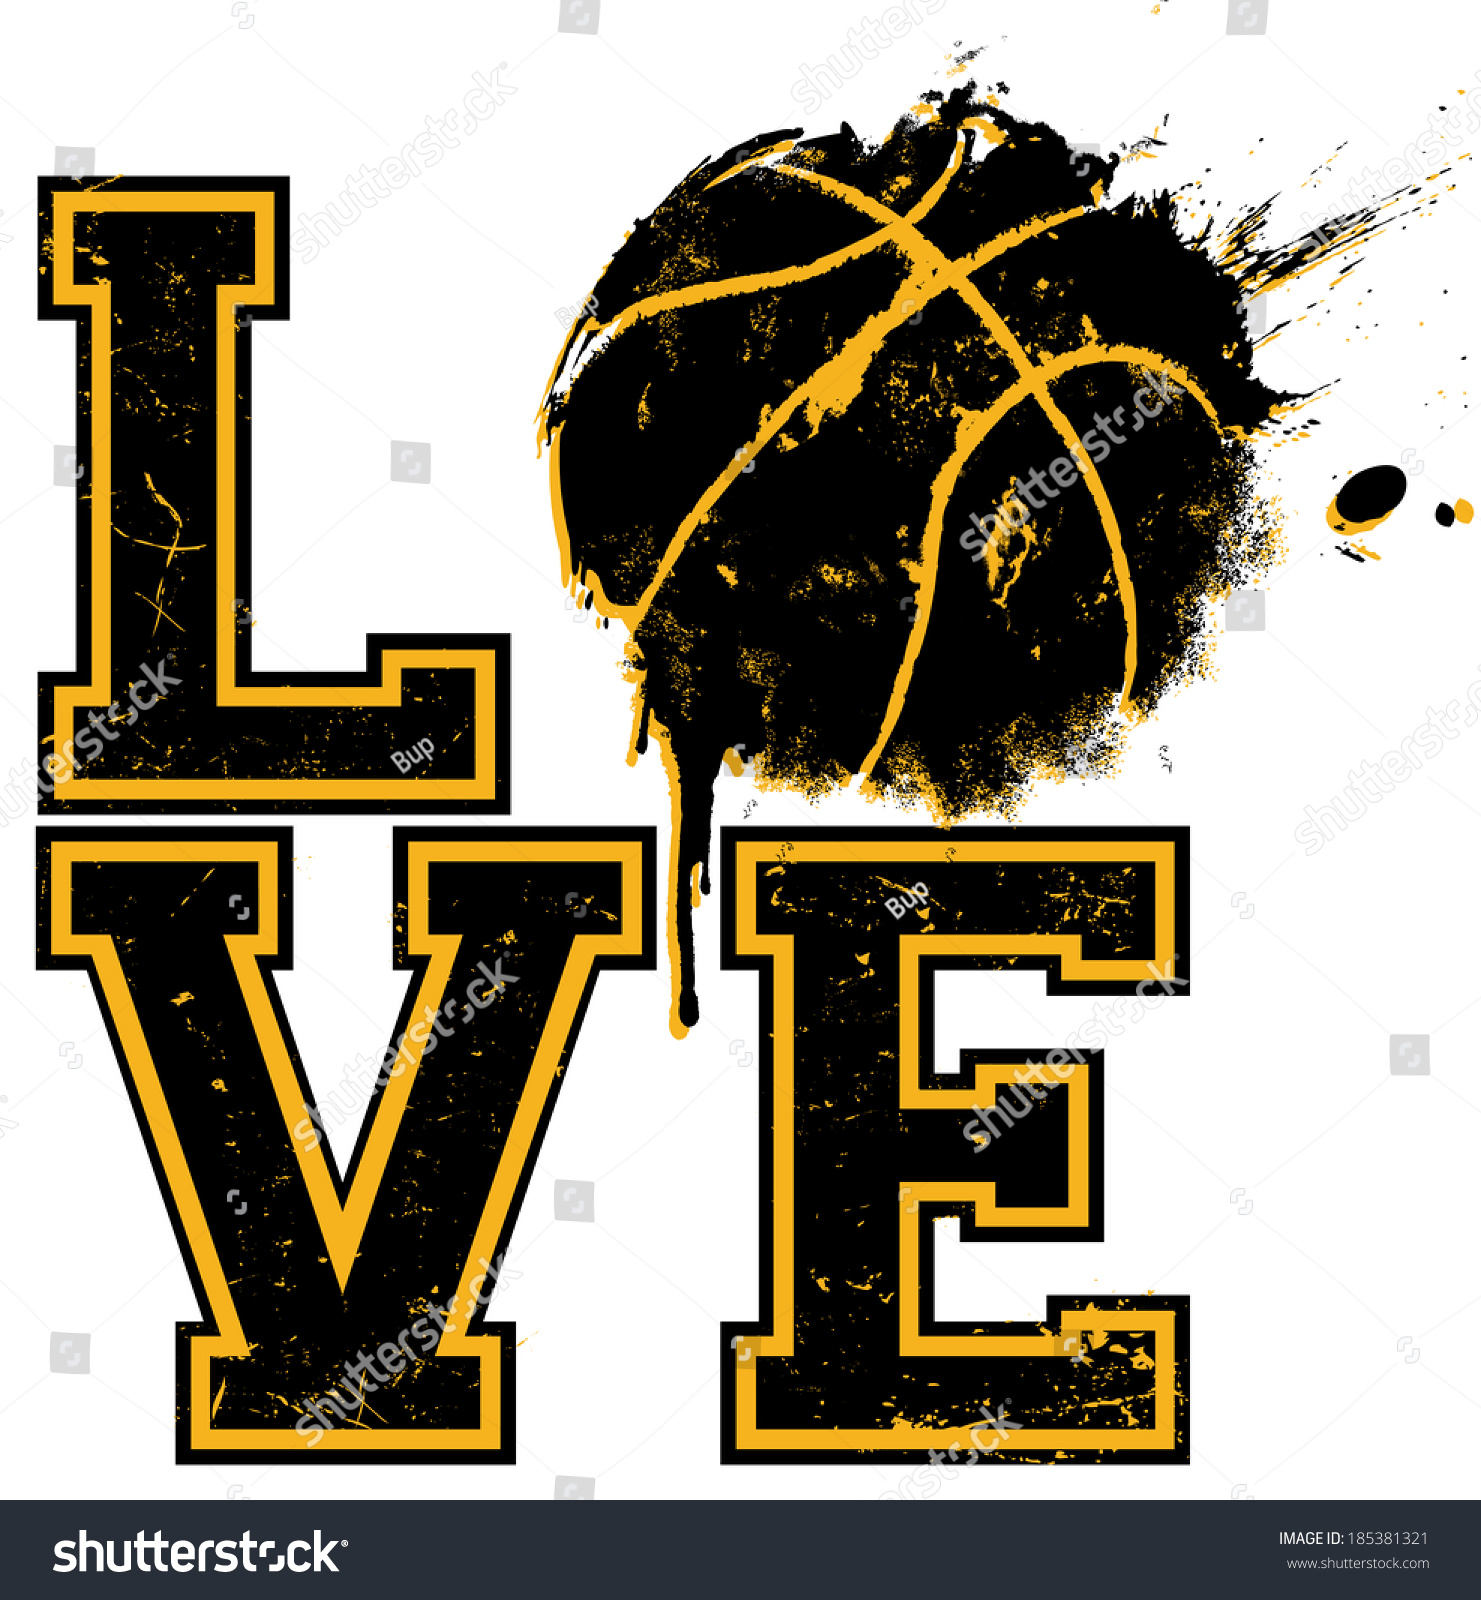 Basketball Love Image Stock Photos Vectors Shutterstock